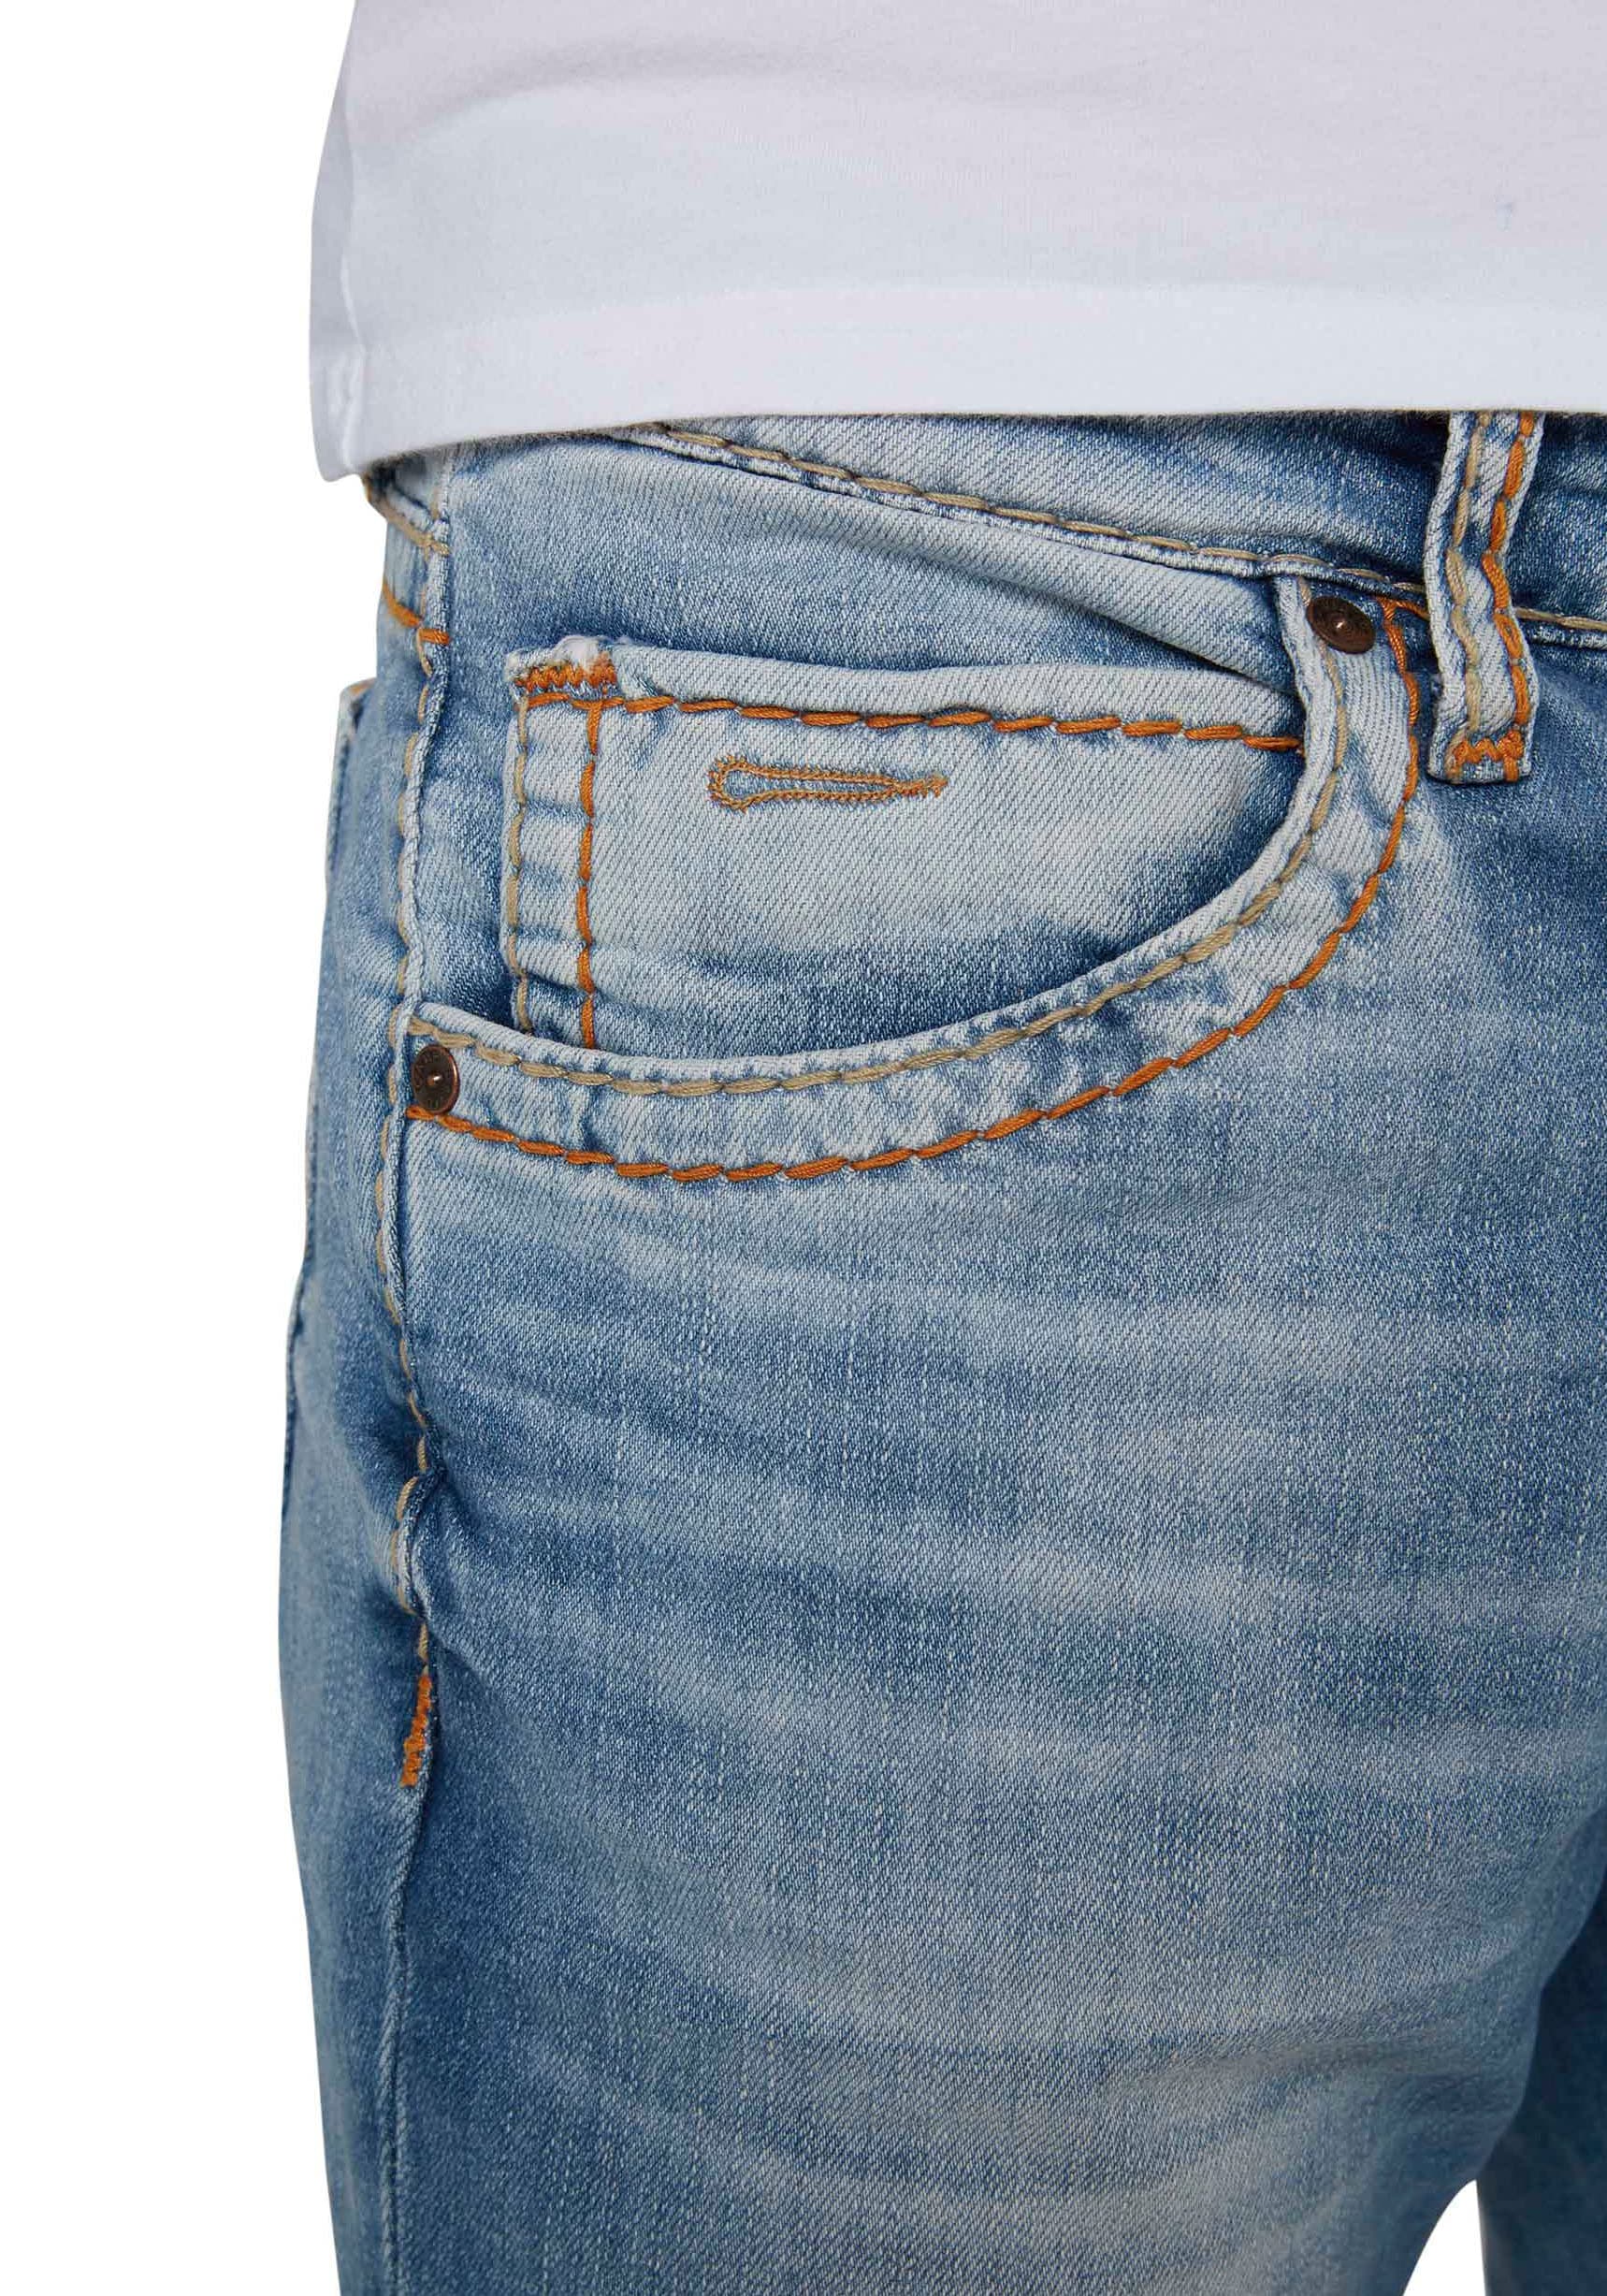 CAMP DAVID Straight-Jeans »NI:CO:R611«, mit markanten Steppnähten